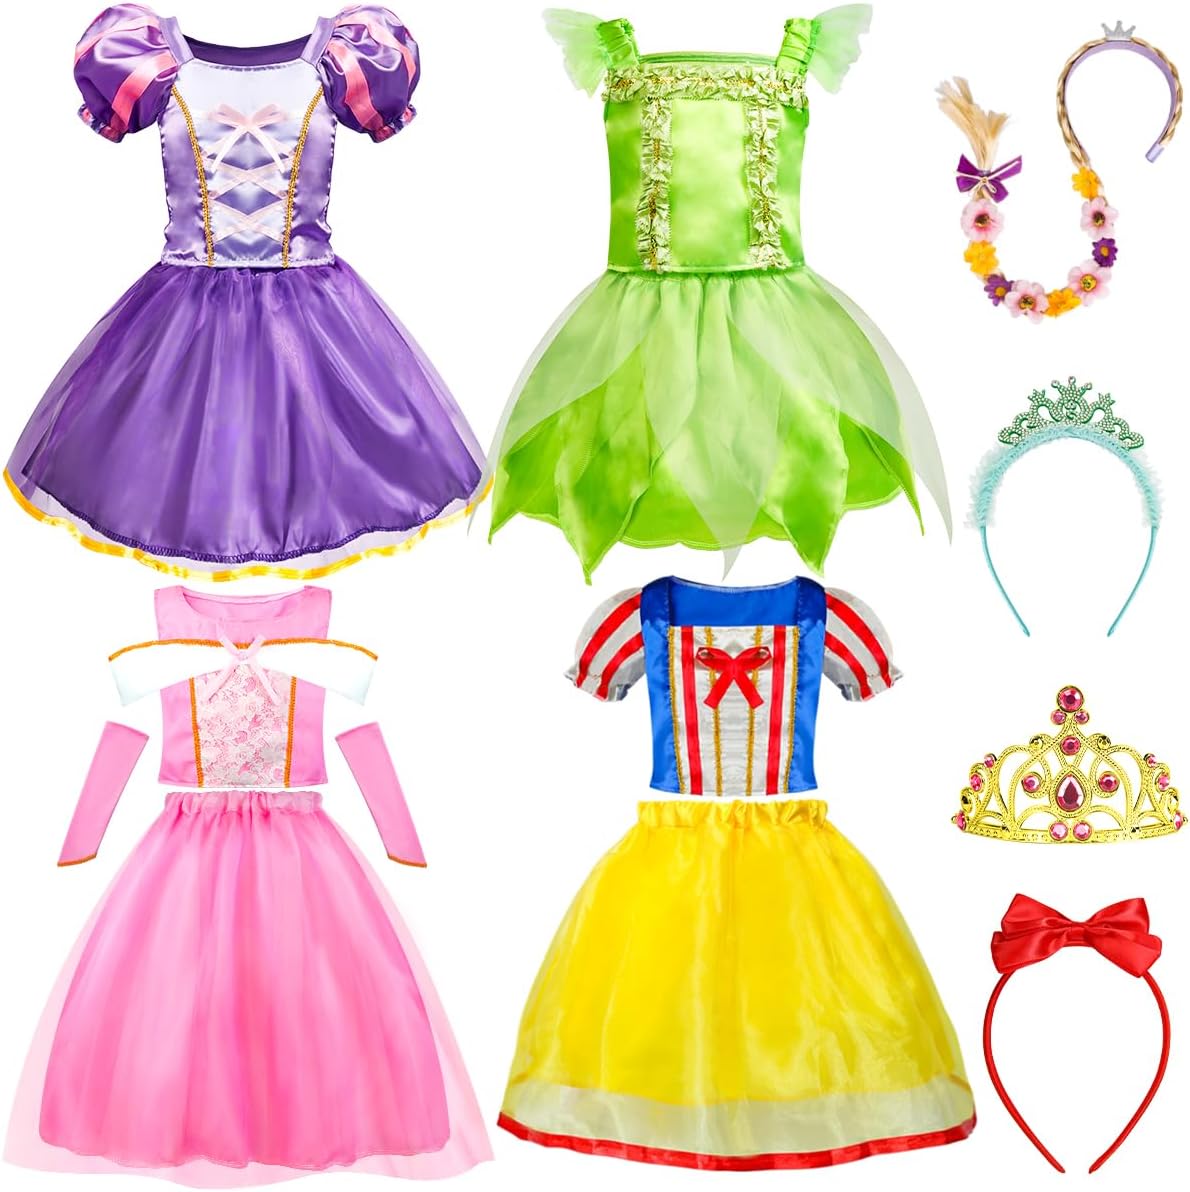 Princess Dress Up - Princess Dress for Girls Age 3-8 with Princess Toys - Cykapu